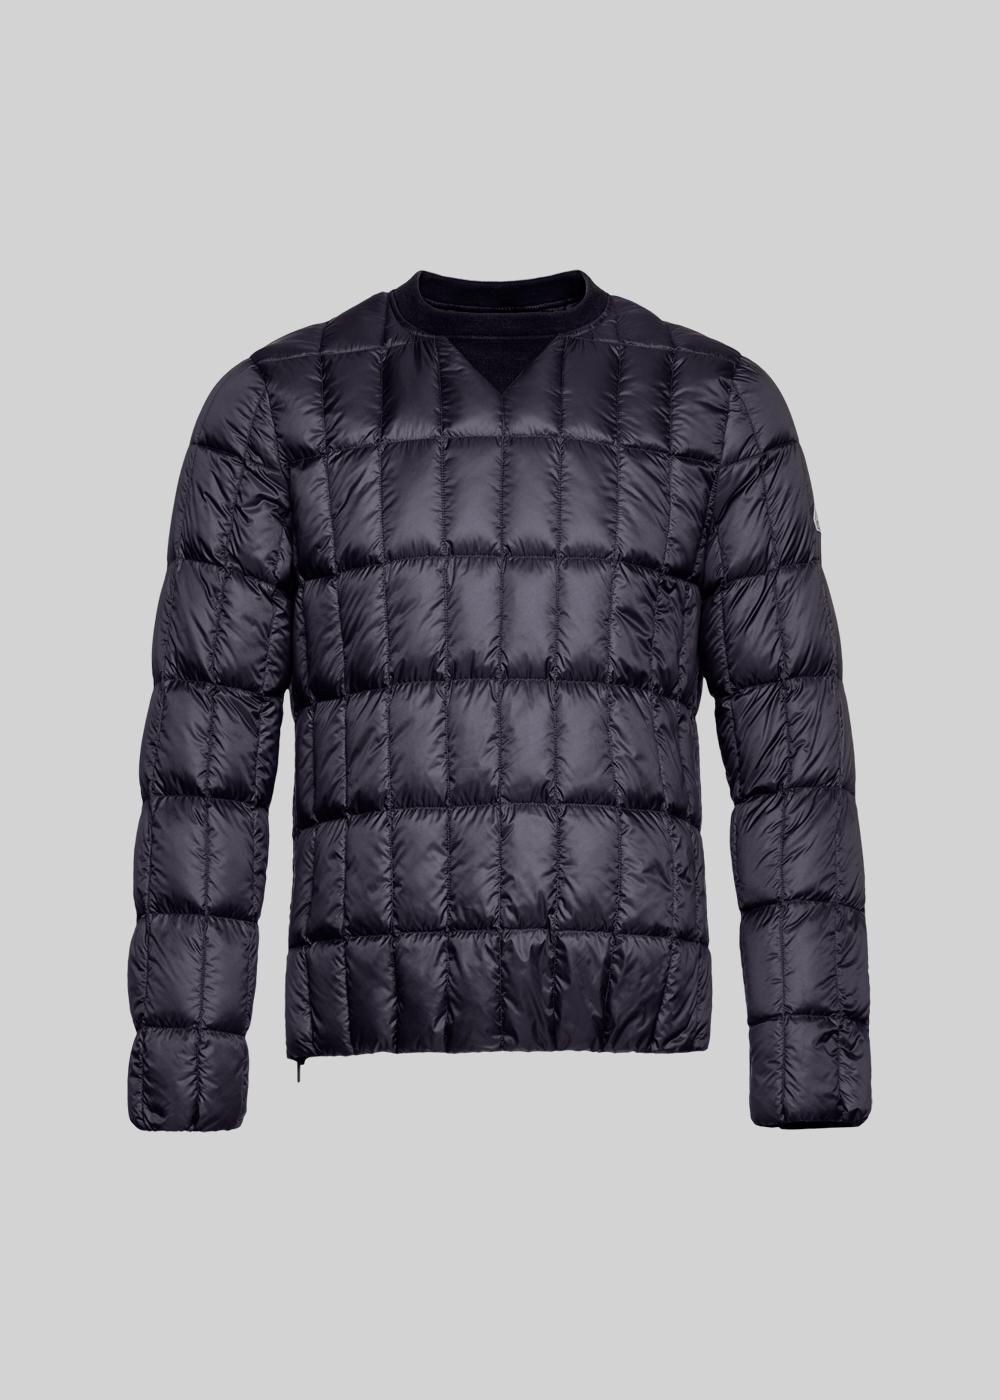 Ultralight sweater Strand black-3